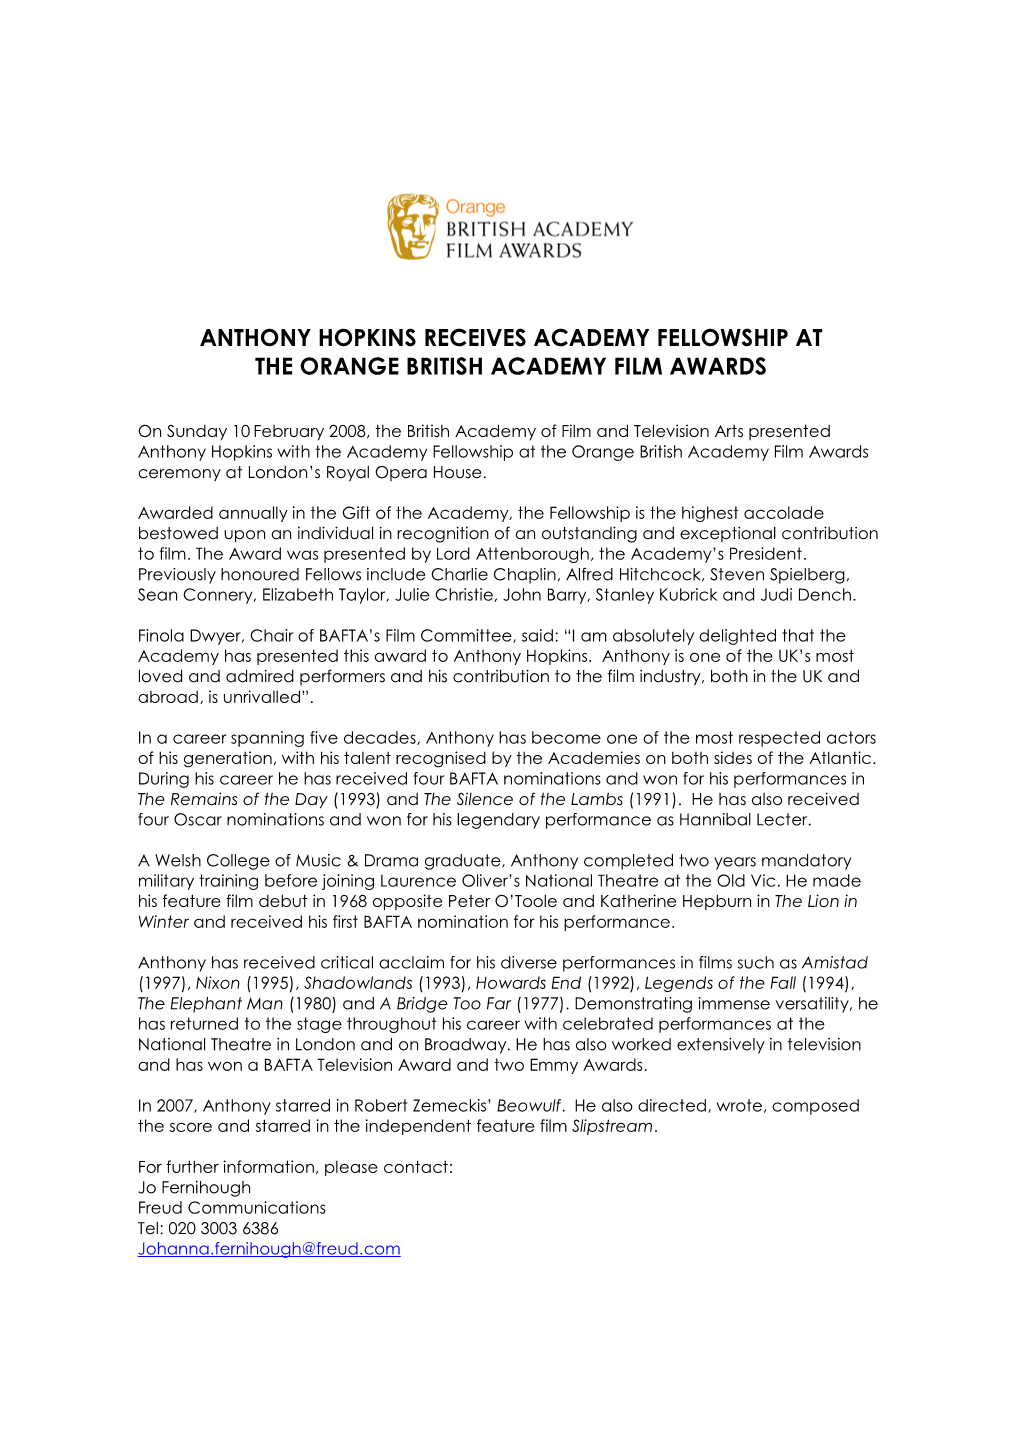 Anthony Hopkins Receives Academy Fellowship at the Orange British Academy Film Awards